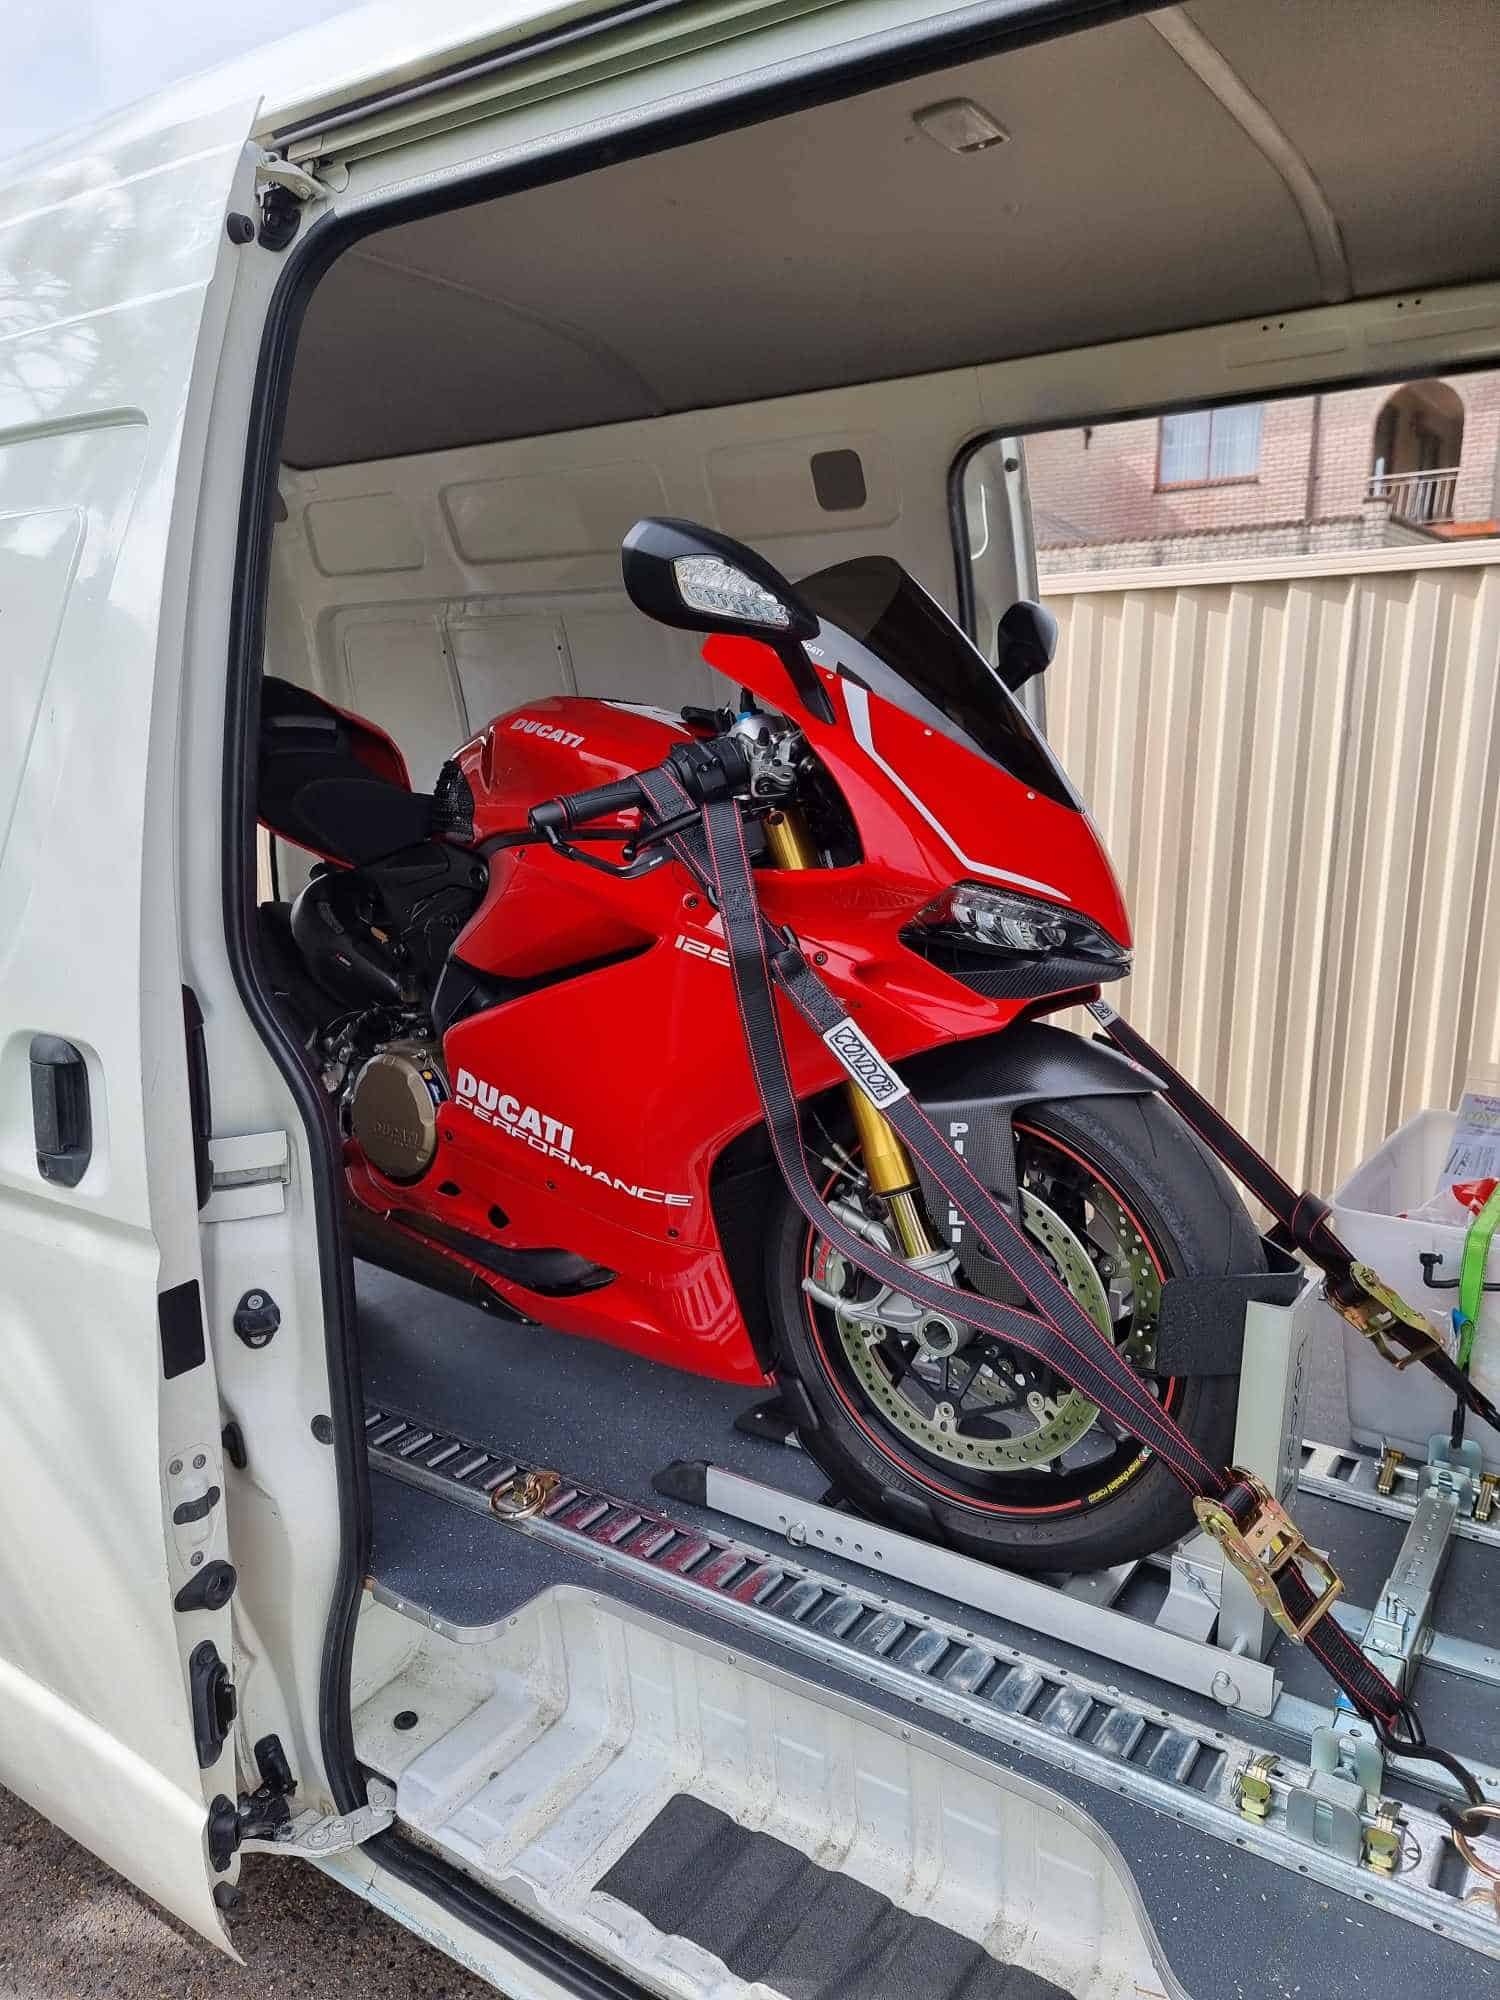 Ducati in van getting delivered